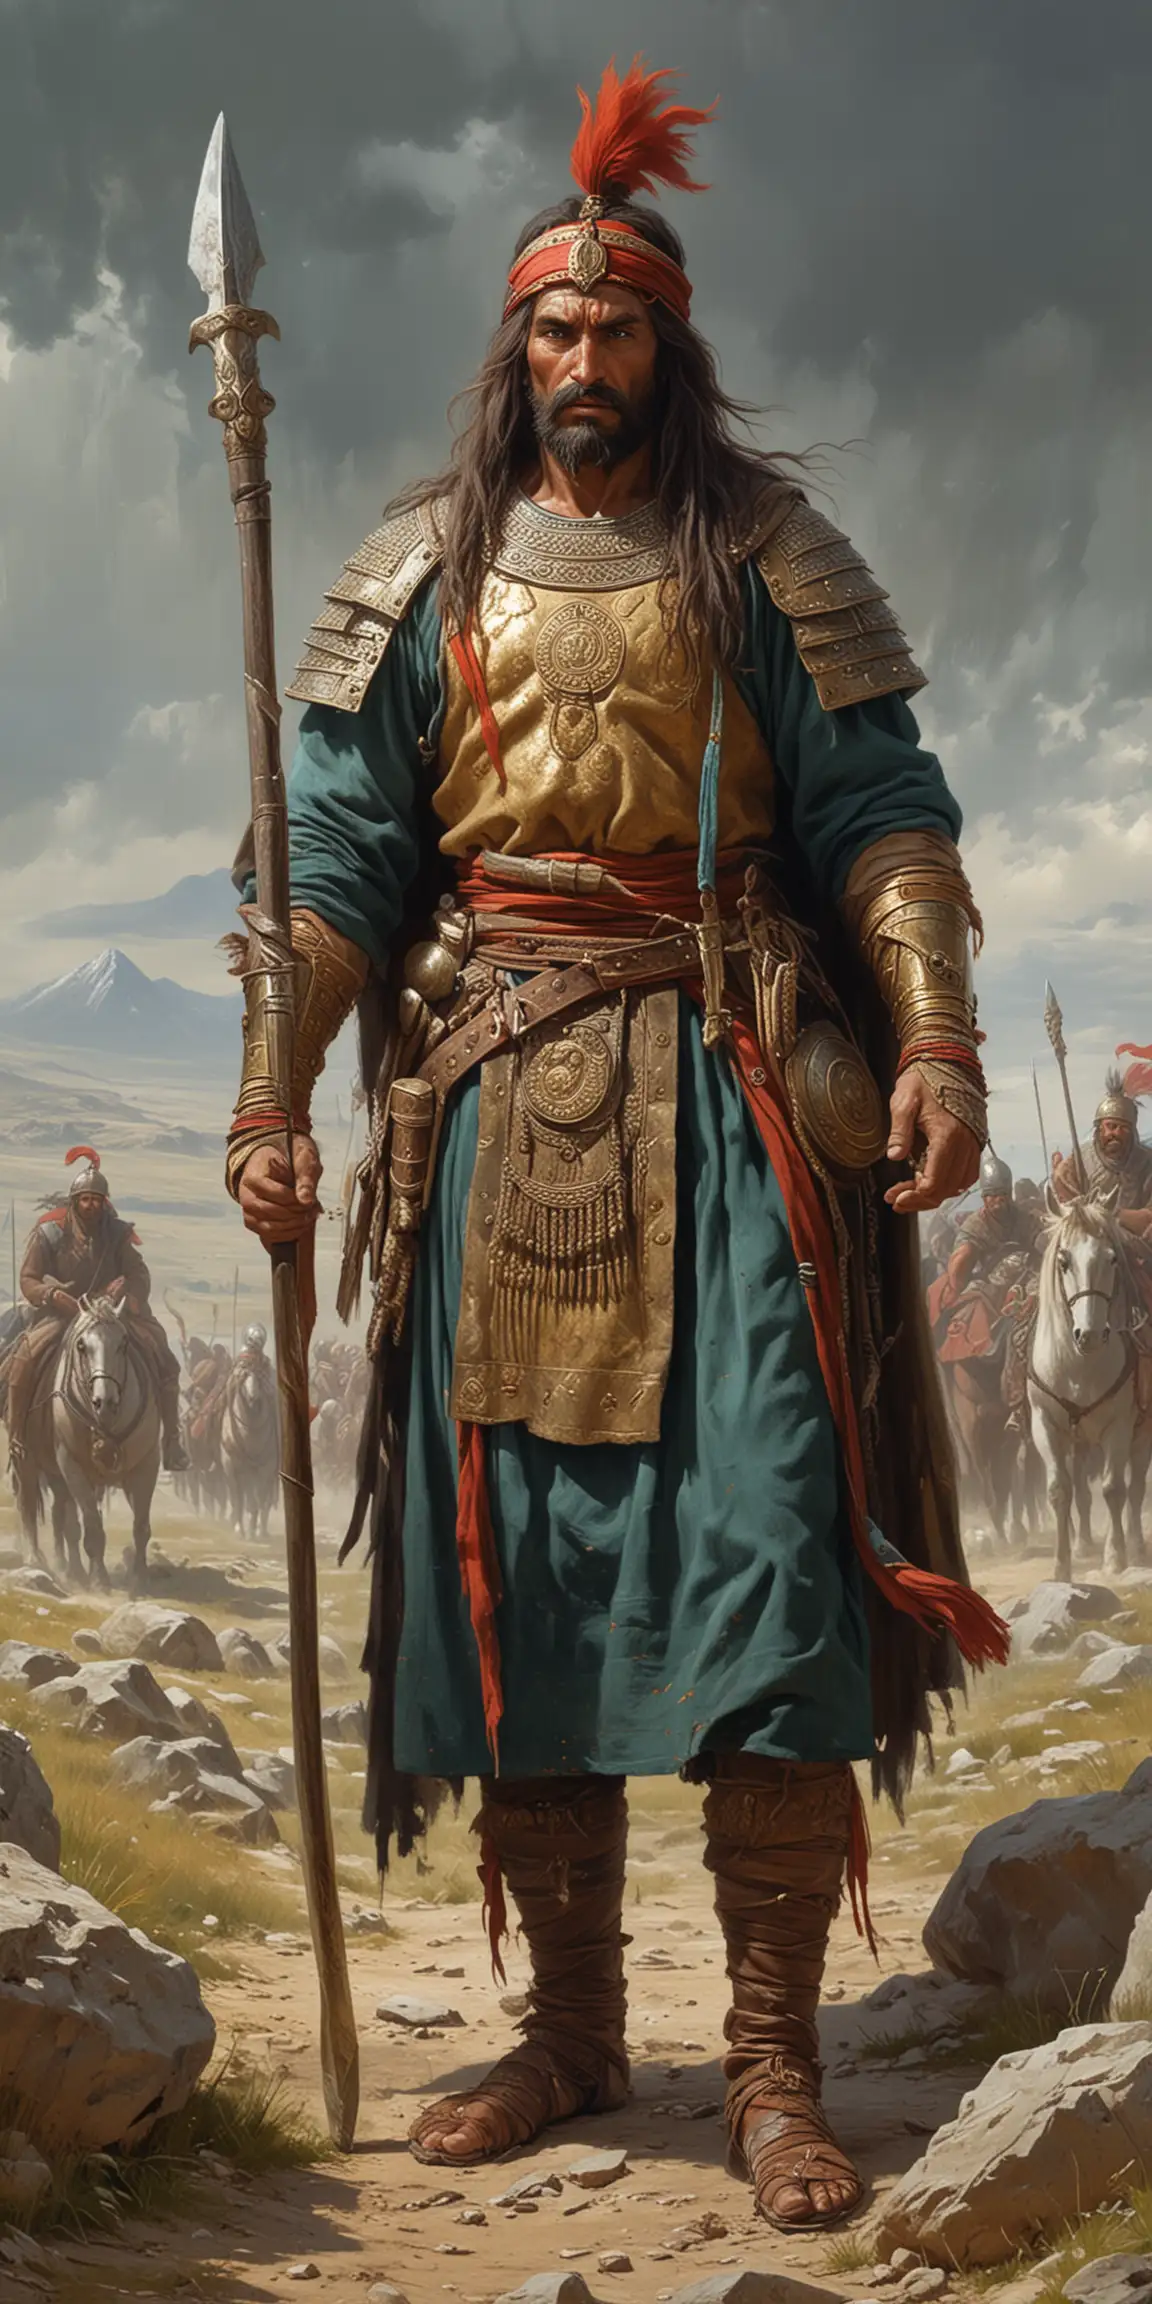 Bulgar Warrior God in Majestic Battle Pose